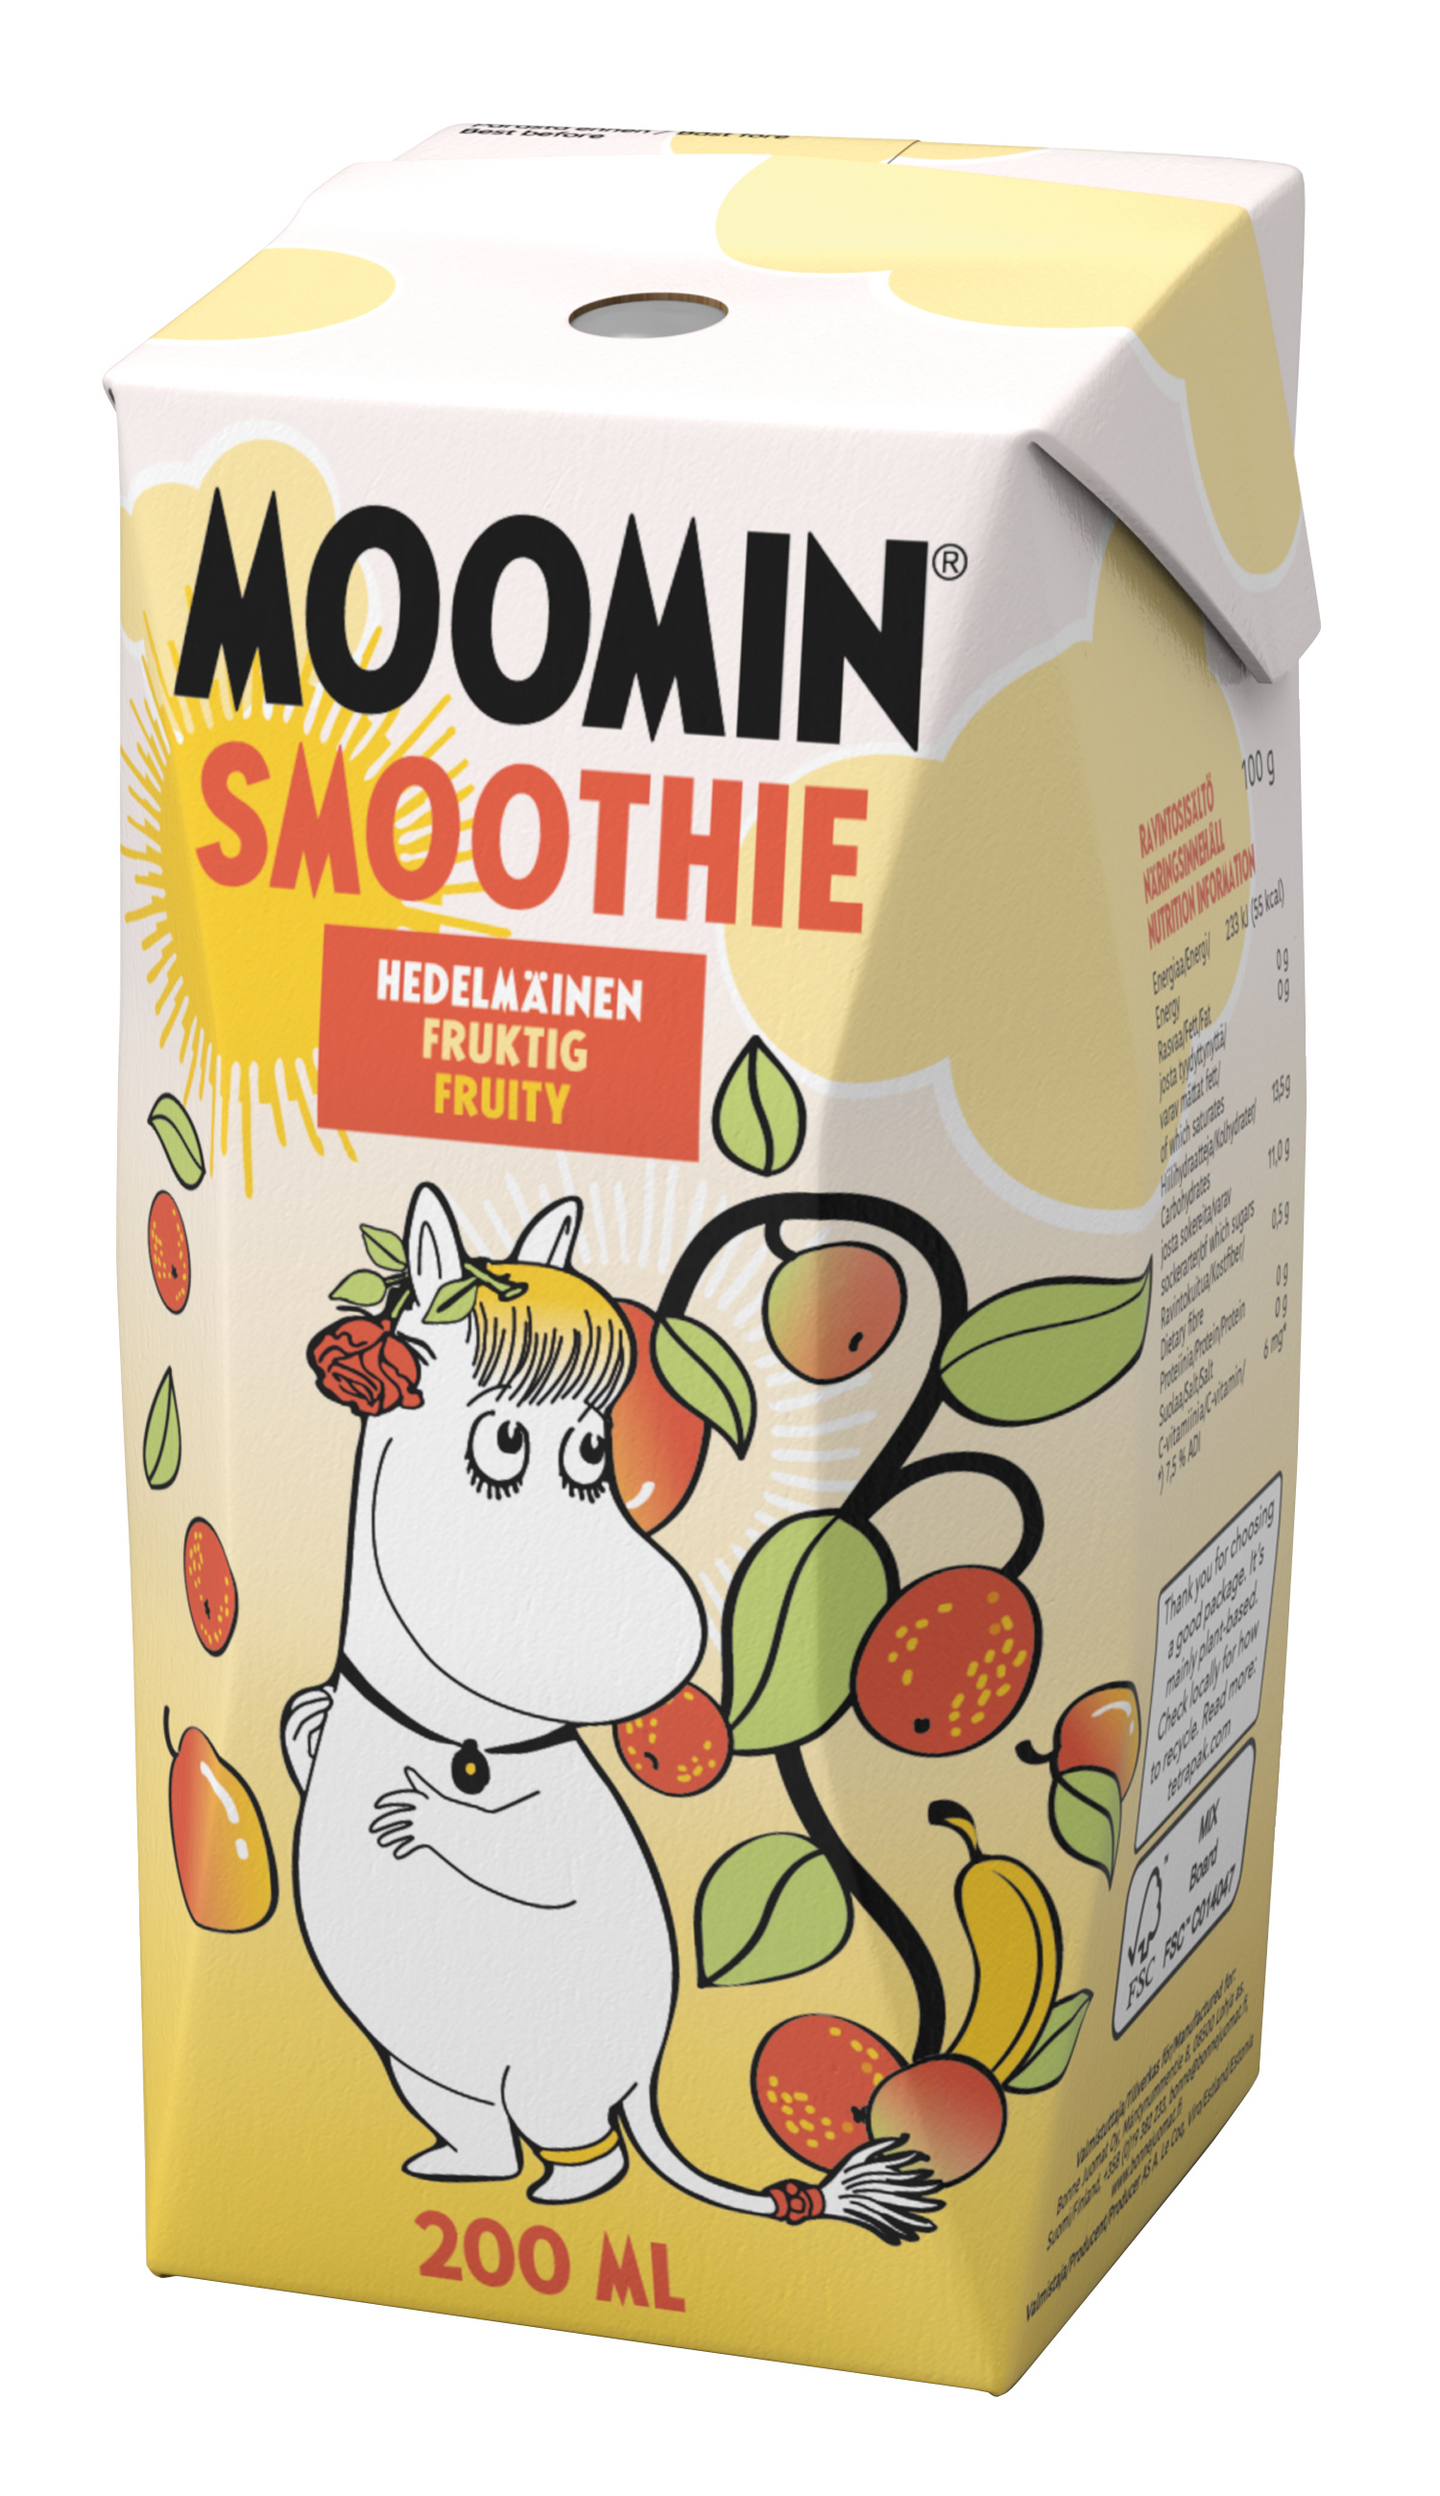 Moomin smoothie 2dl hedelmäinen